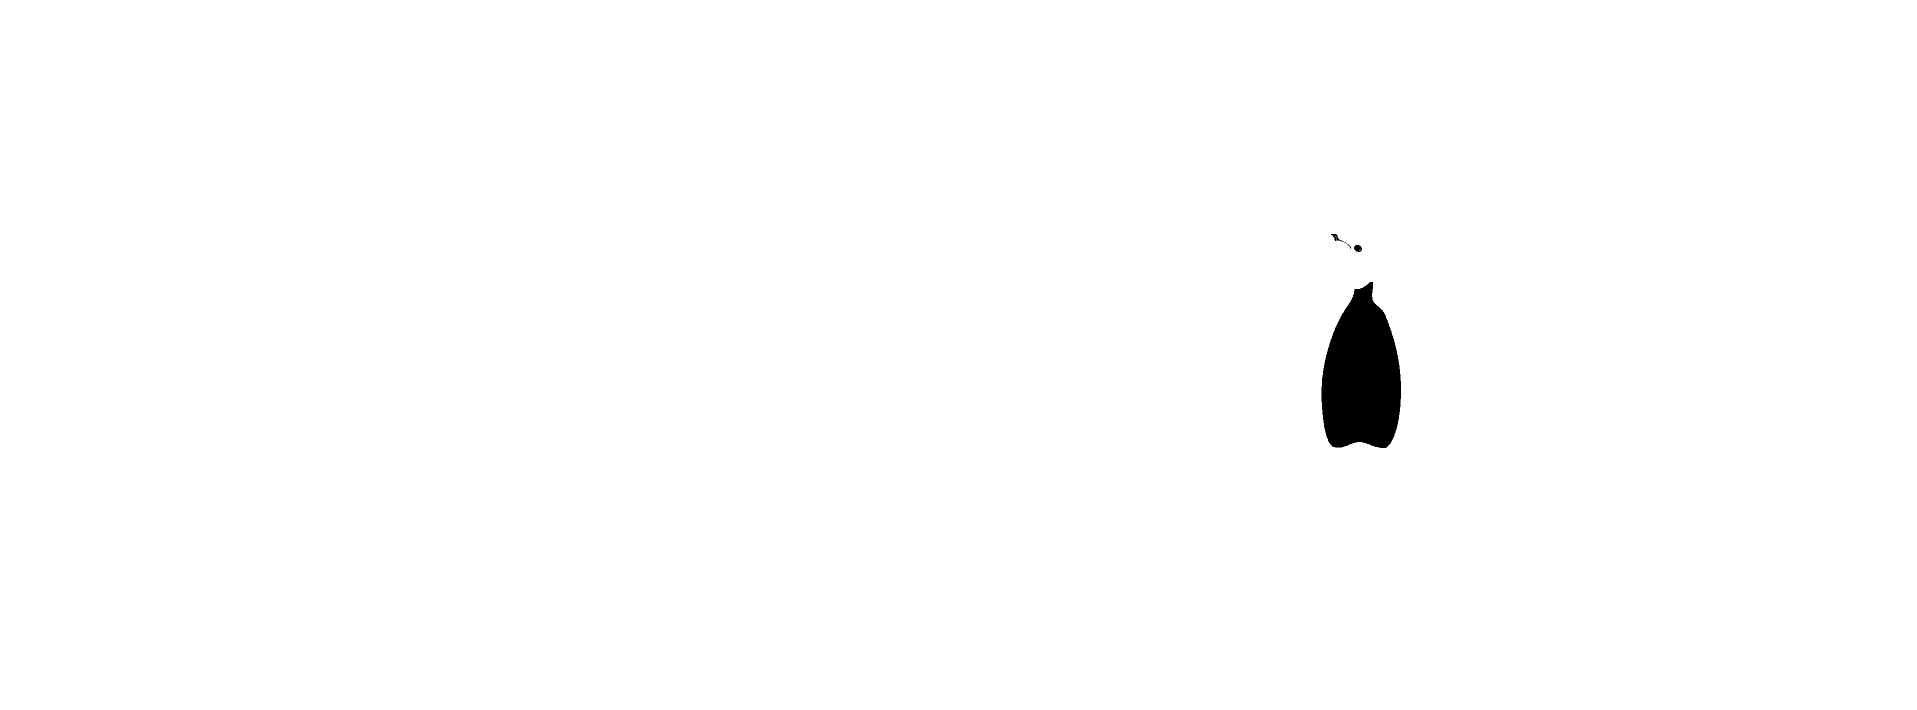 Penguins: Life on the Edge logo